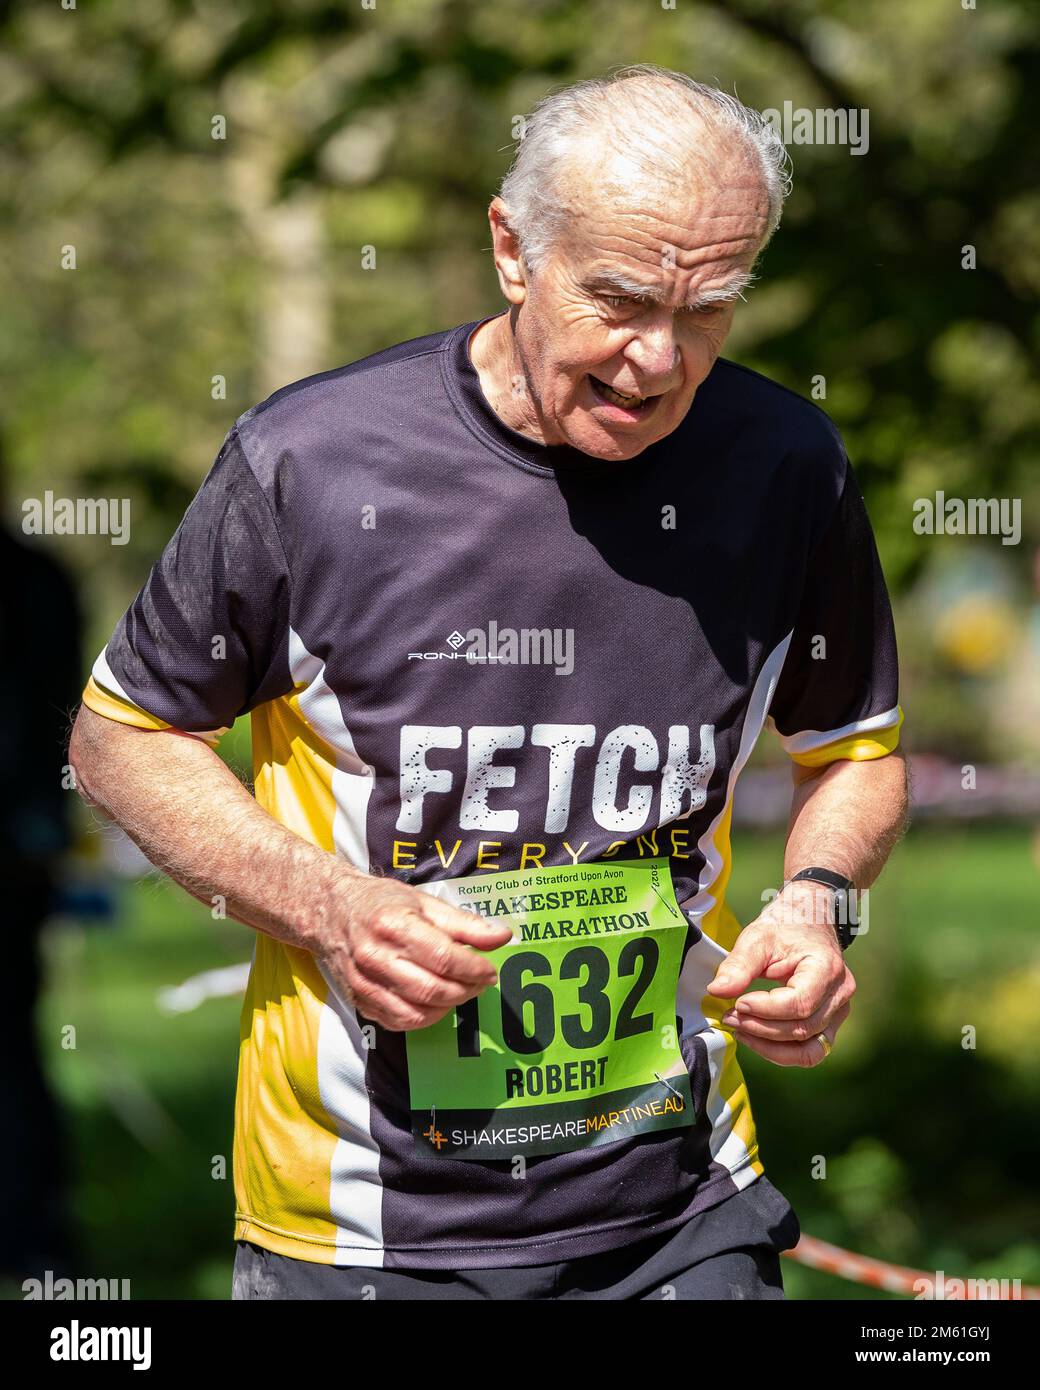 A fit elderly man competing in a half marathon. Stock Photo